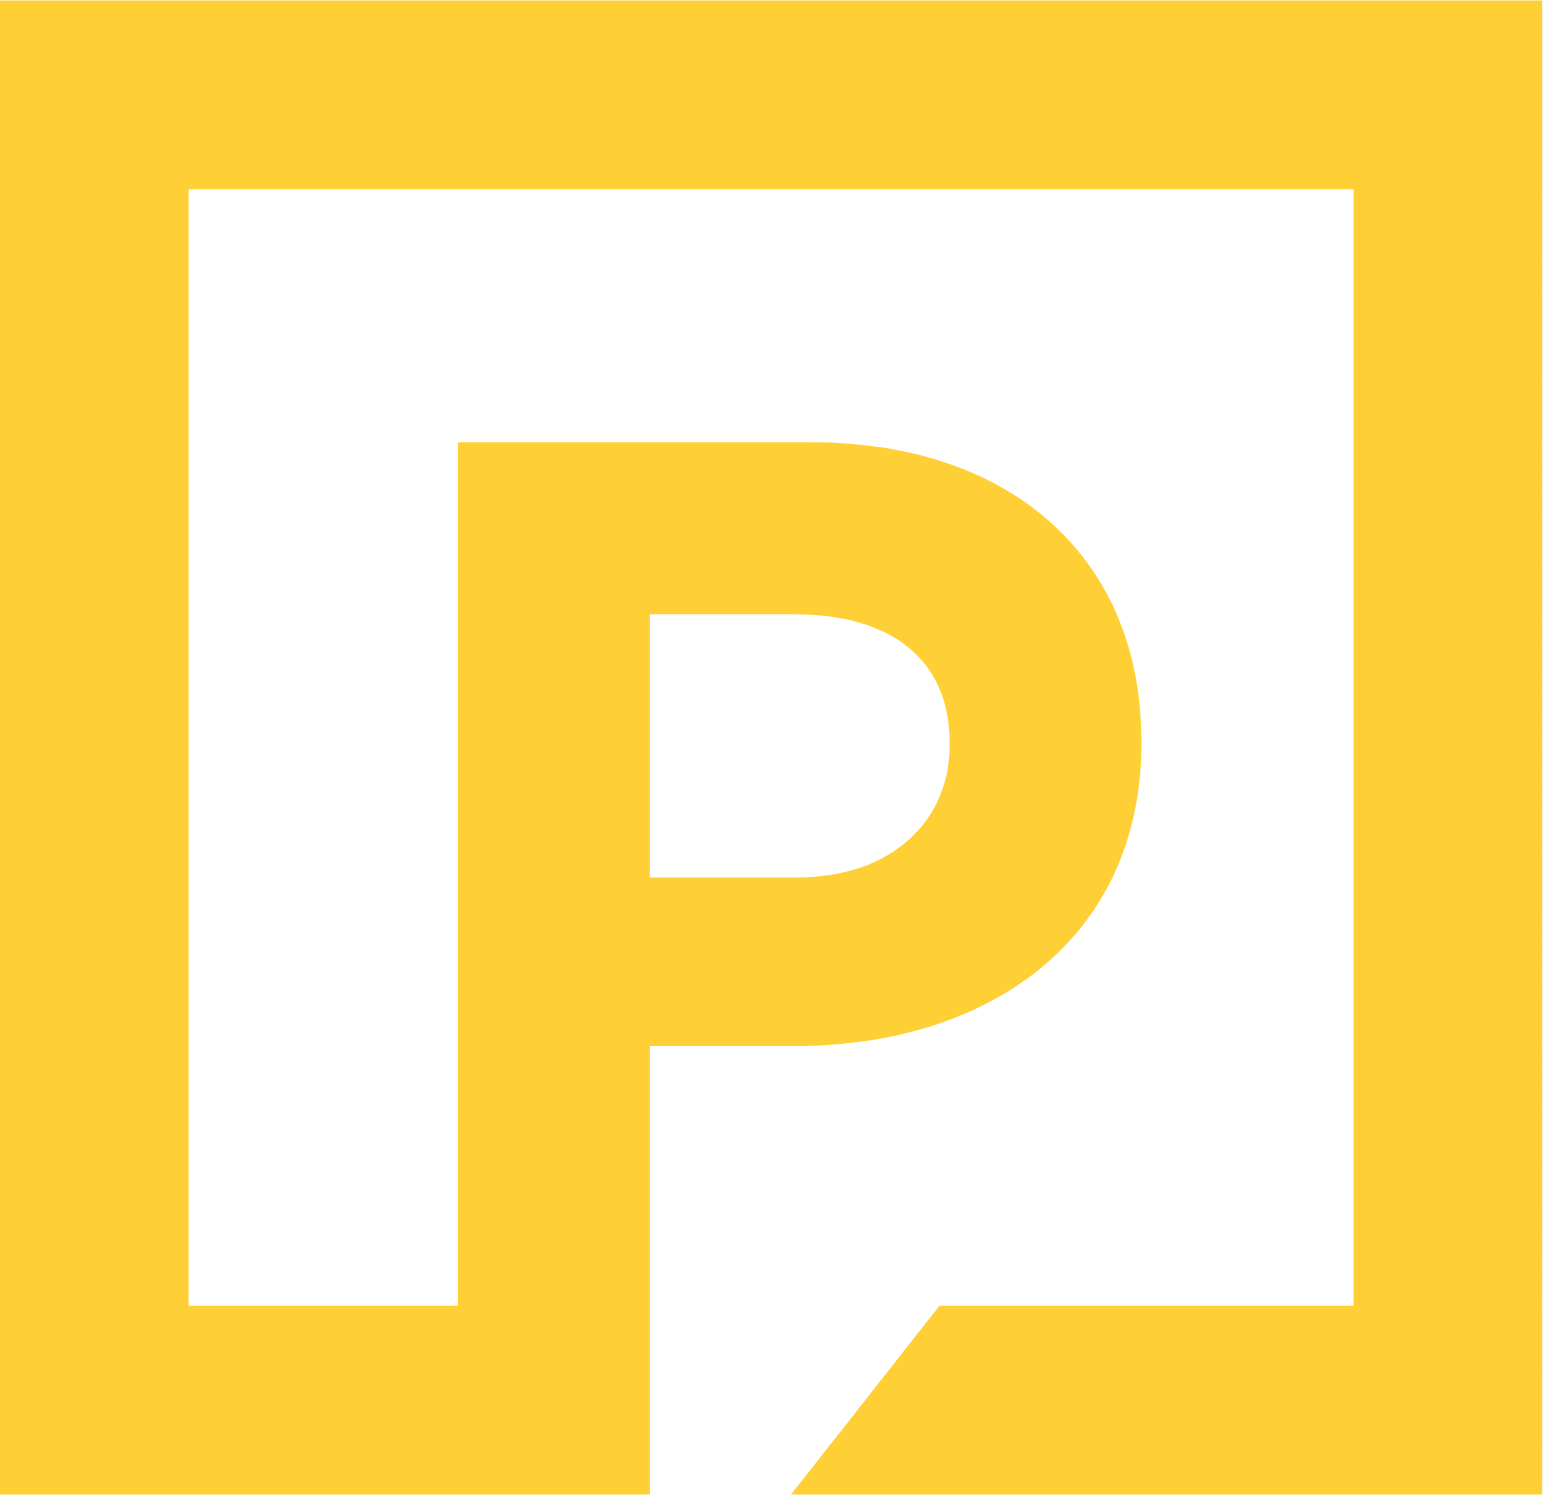 Postmedia Network Canada logo (PNG transparent)